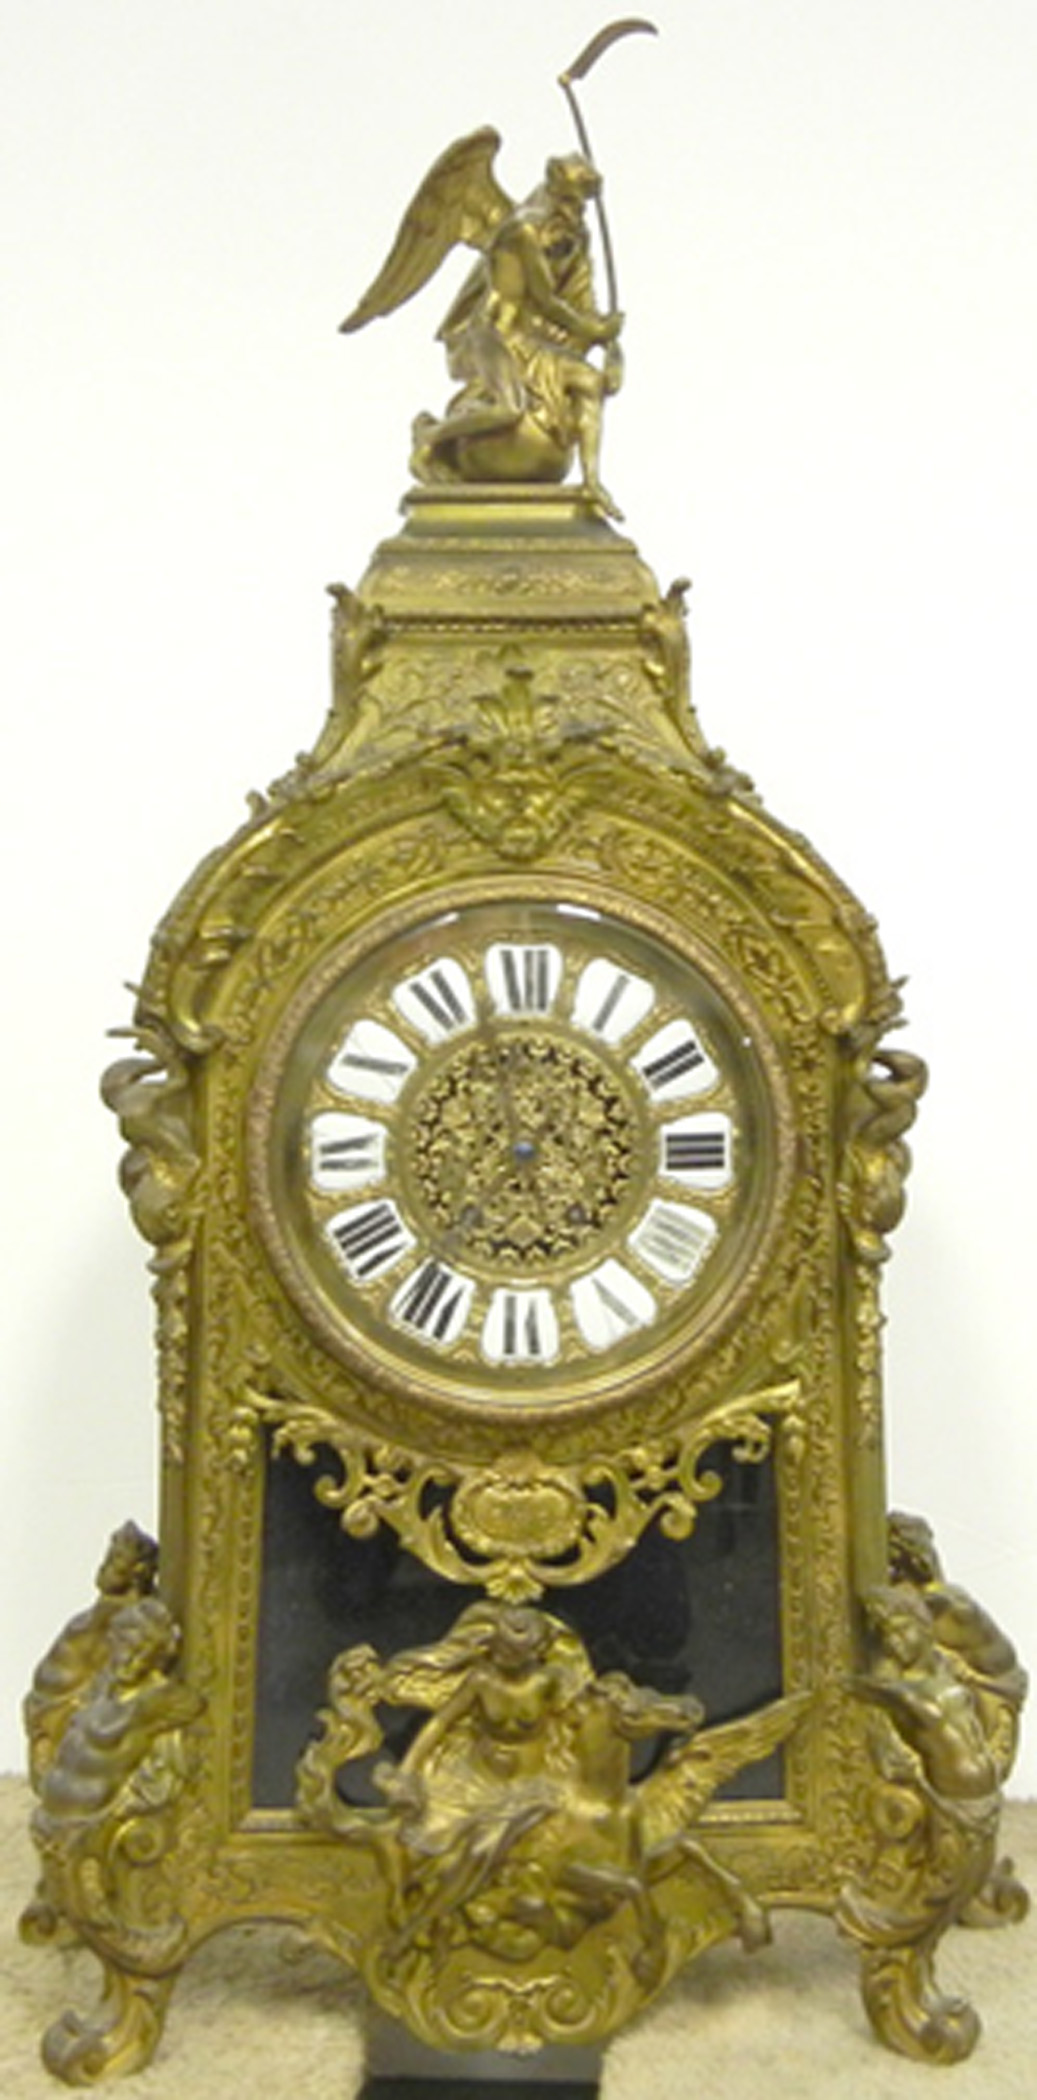 Tiffany & Co. brass-cased clock. Stephenson’s image.